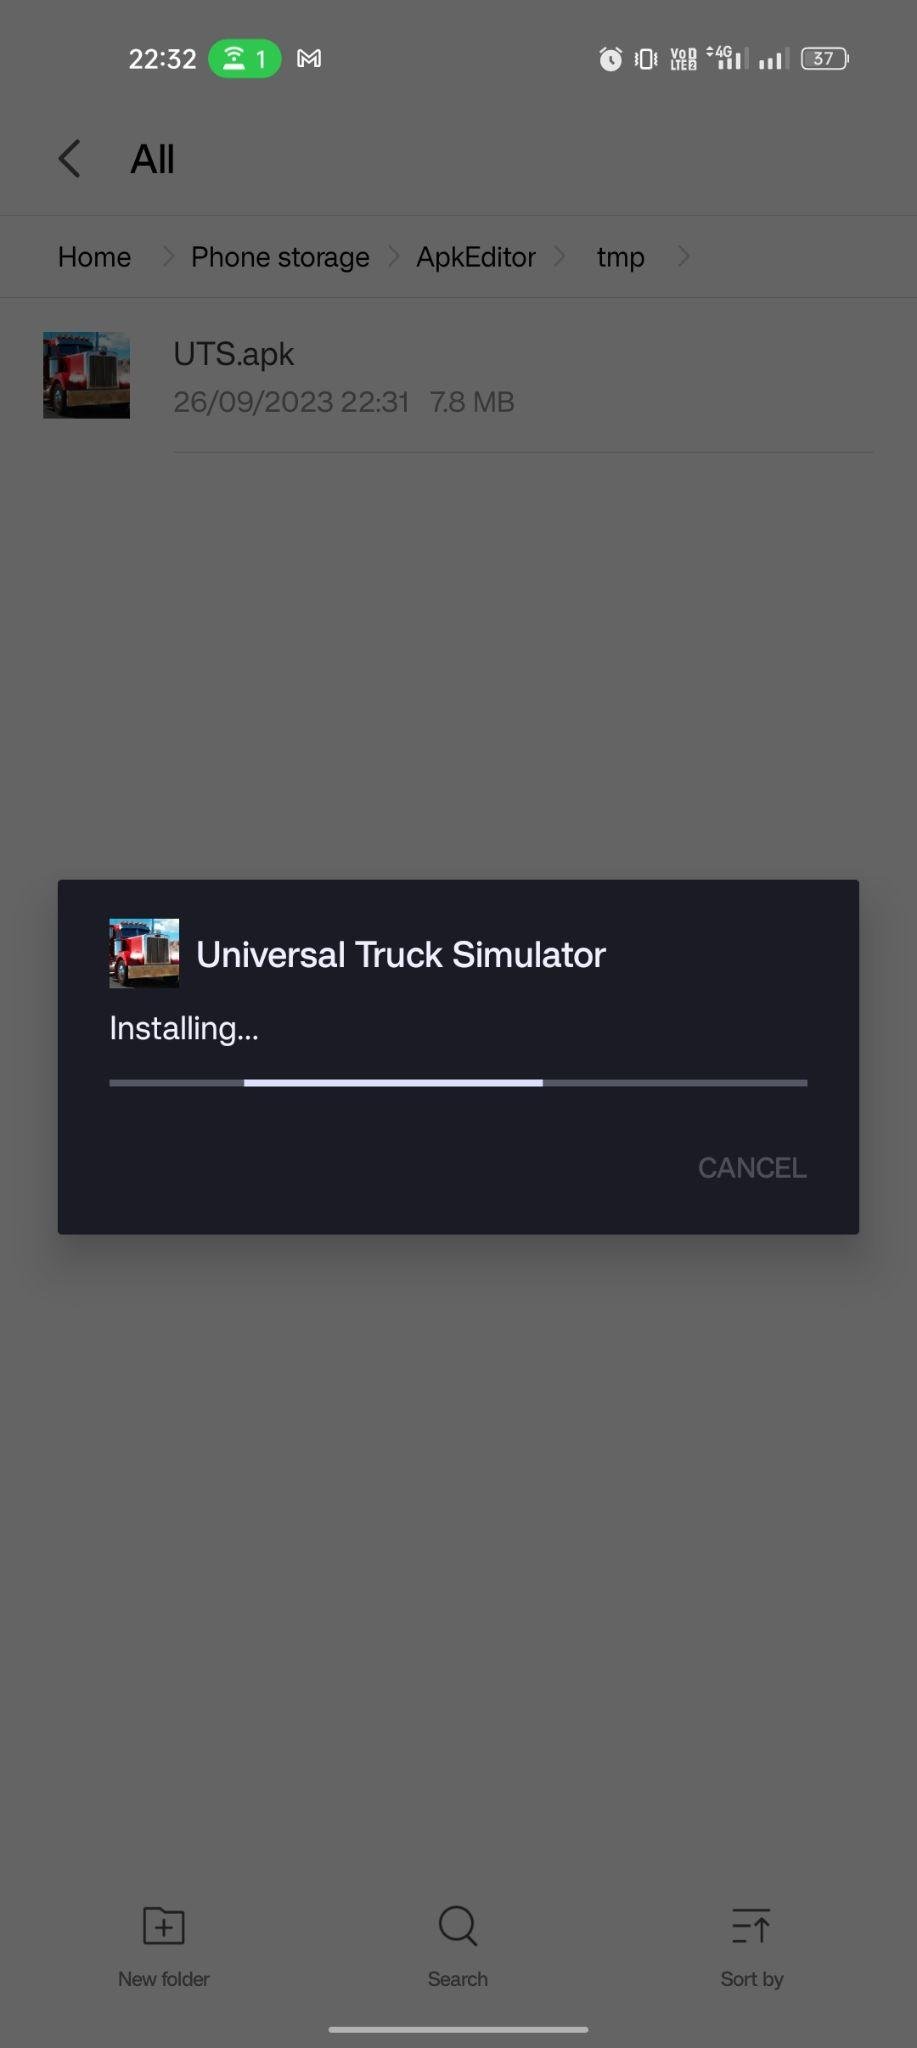 Universal Truck Simulator apk installing